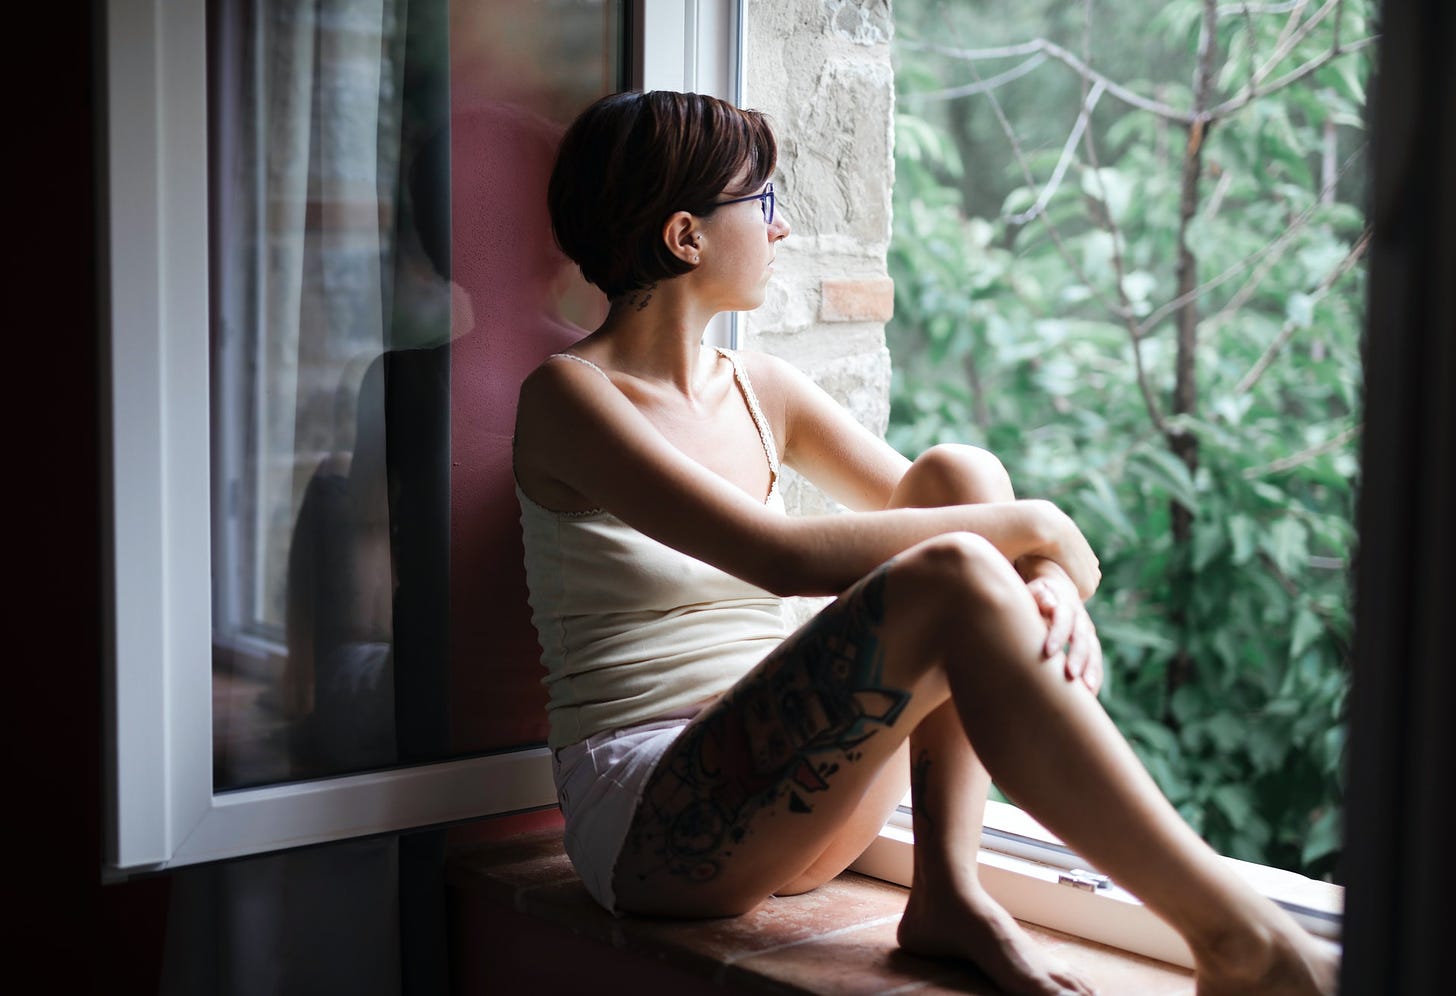 Woman in white tank sitting on window pane